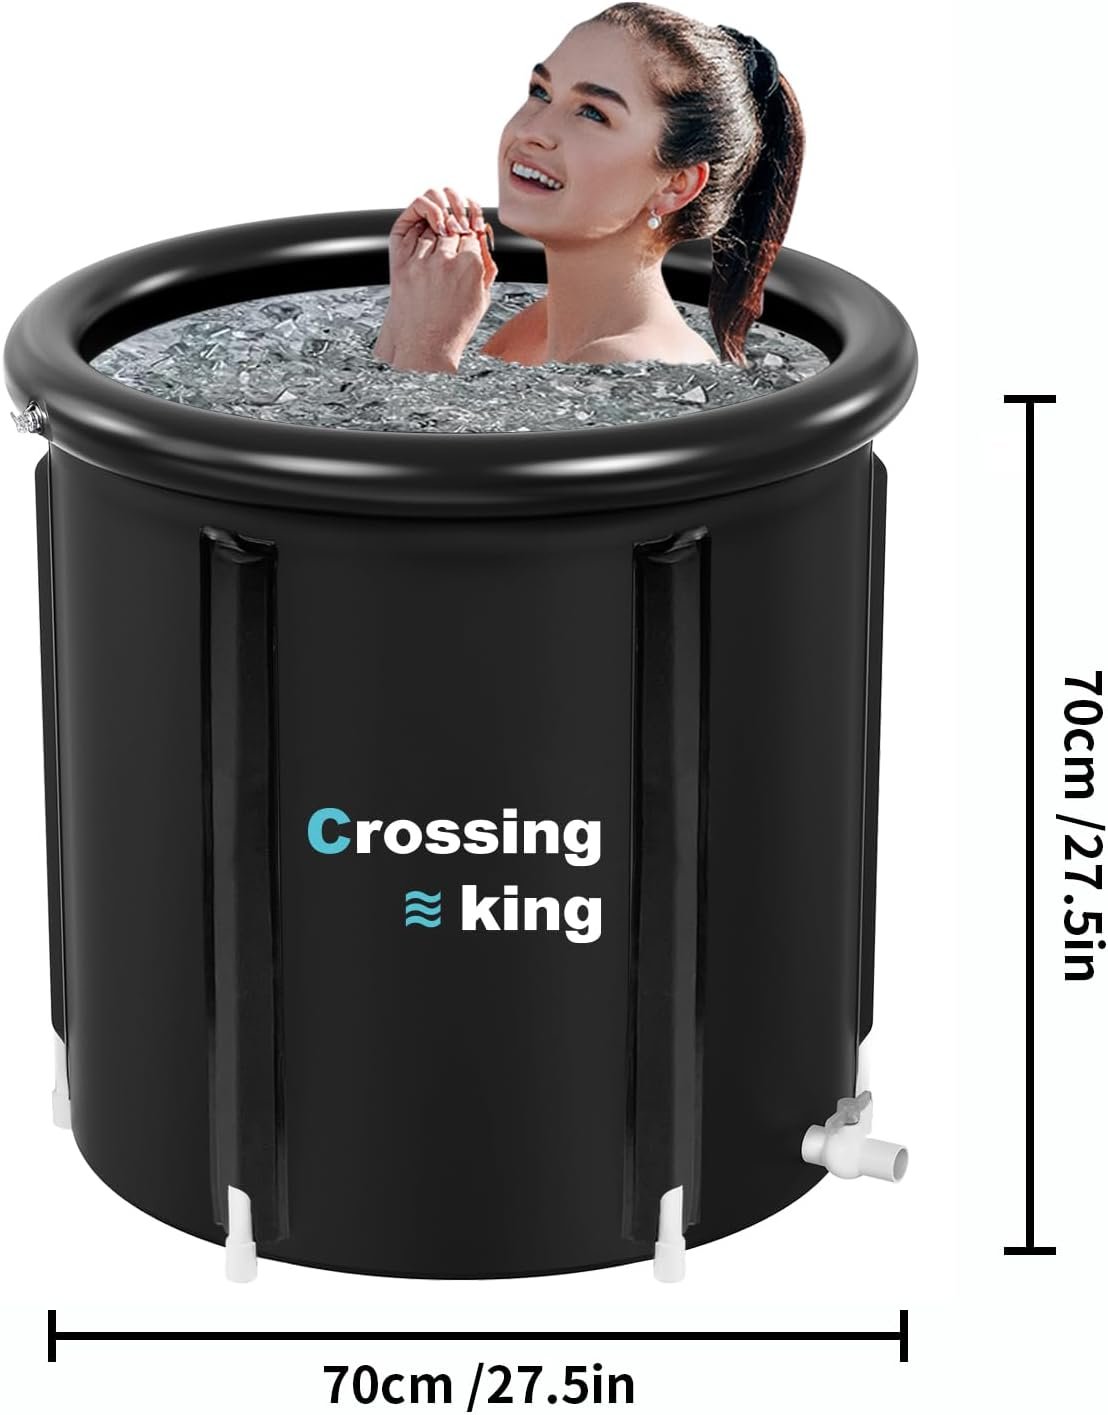 Crossing King Ice Bath Tub Review